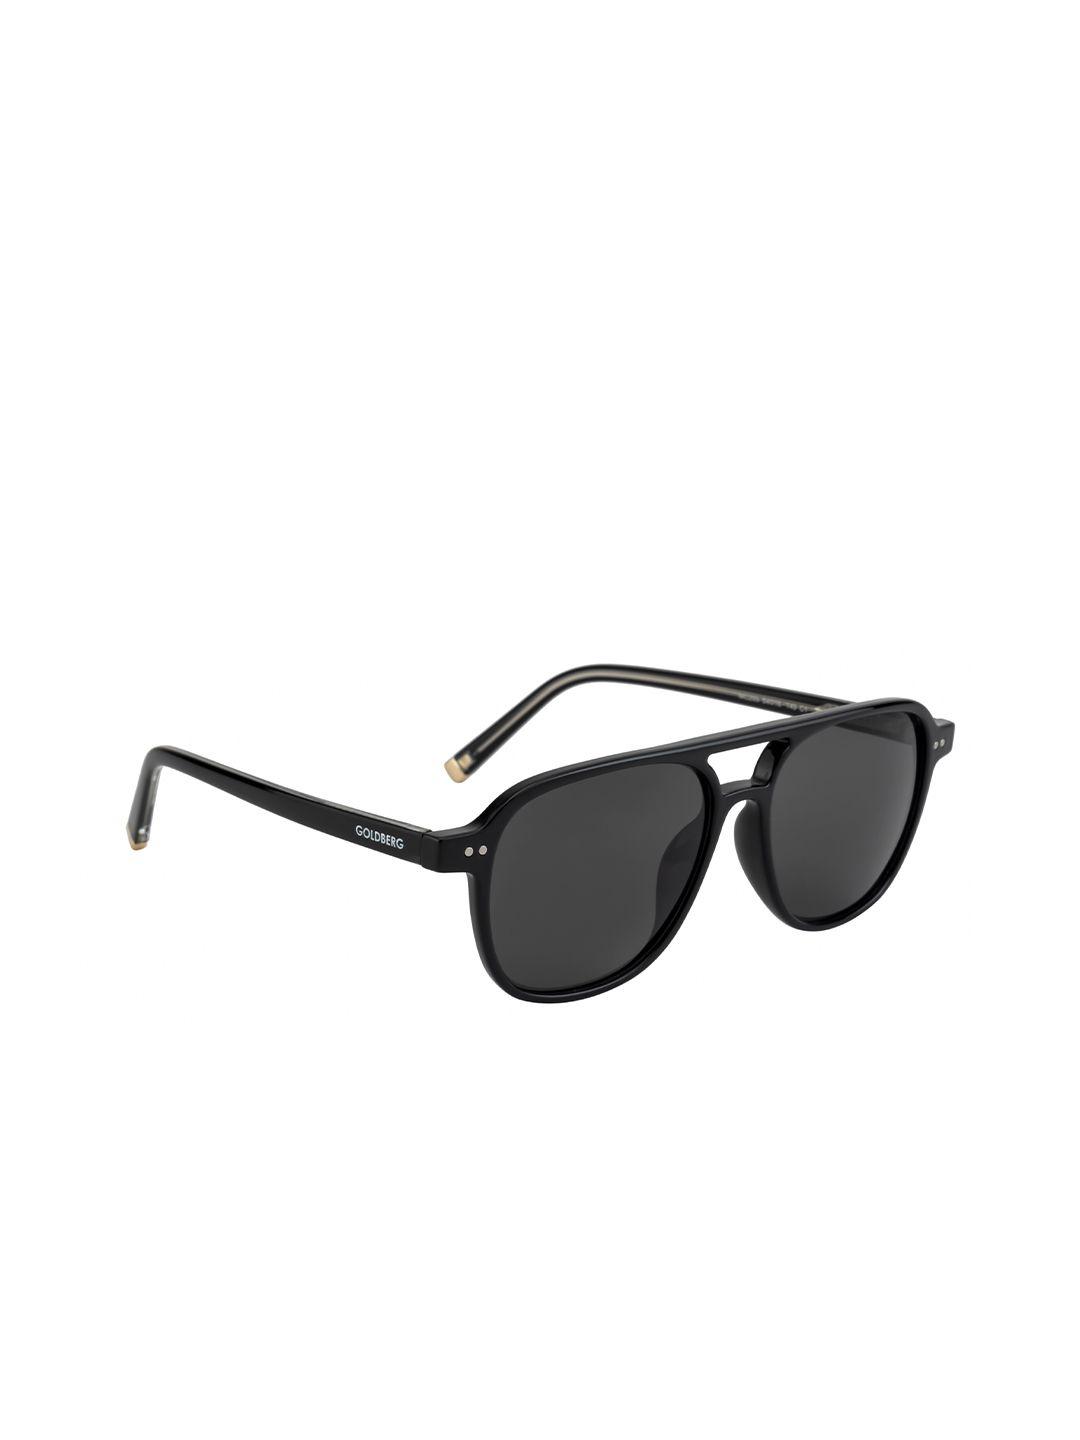 gold berg unisex grey lens & black aviator sunglasses with uv protected lens